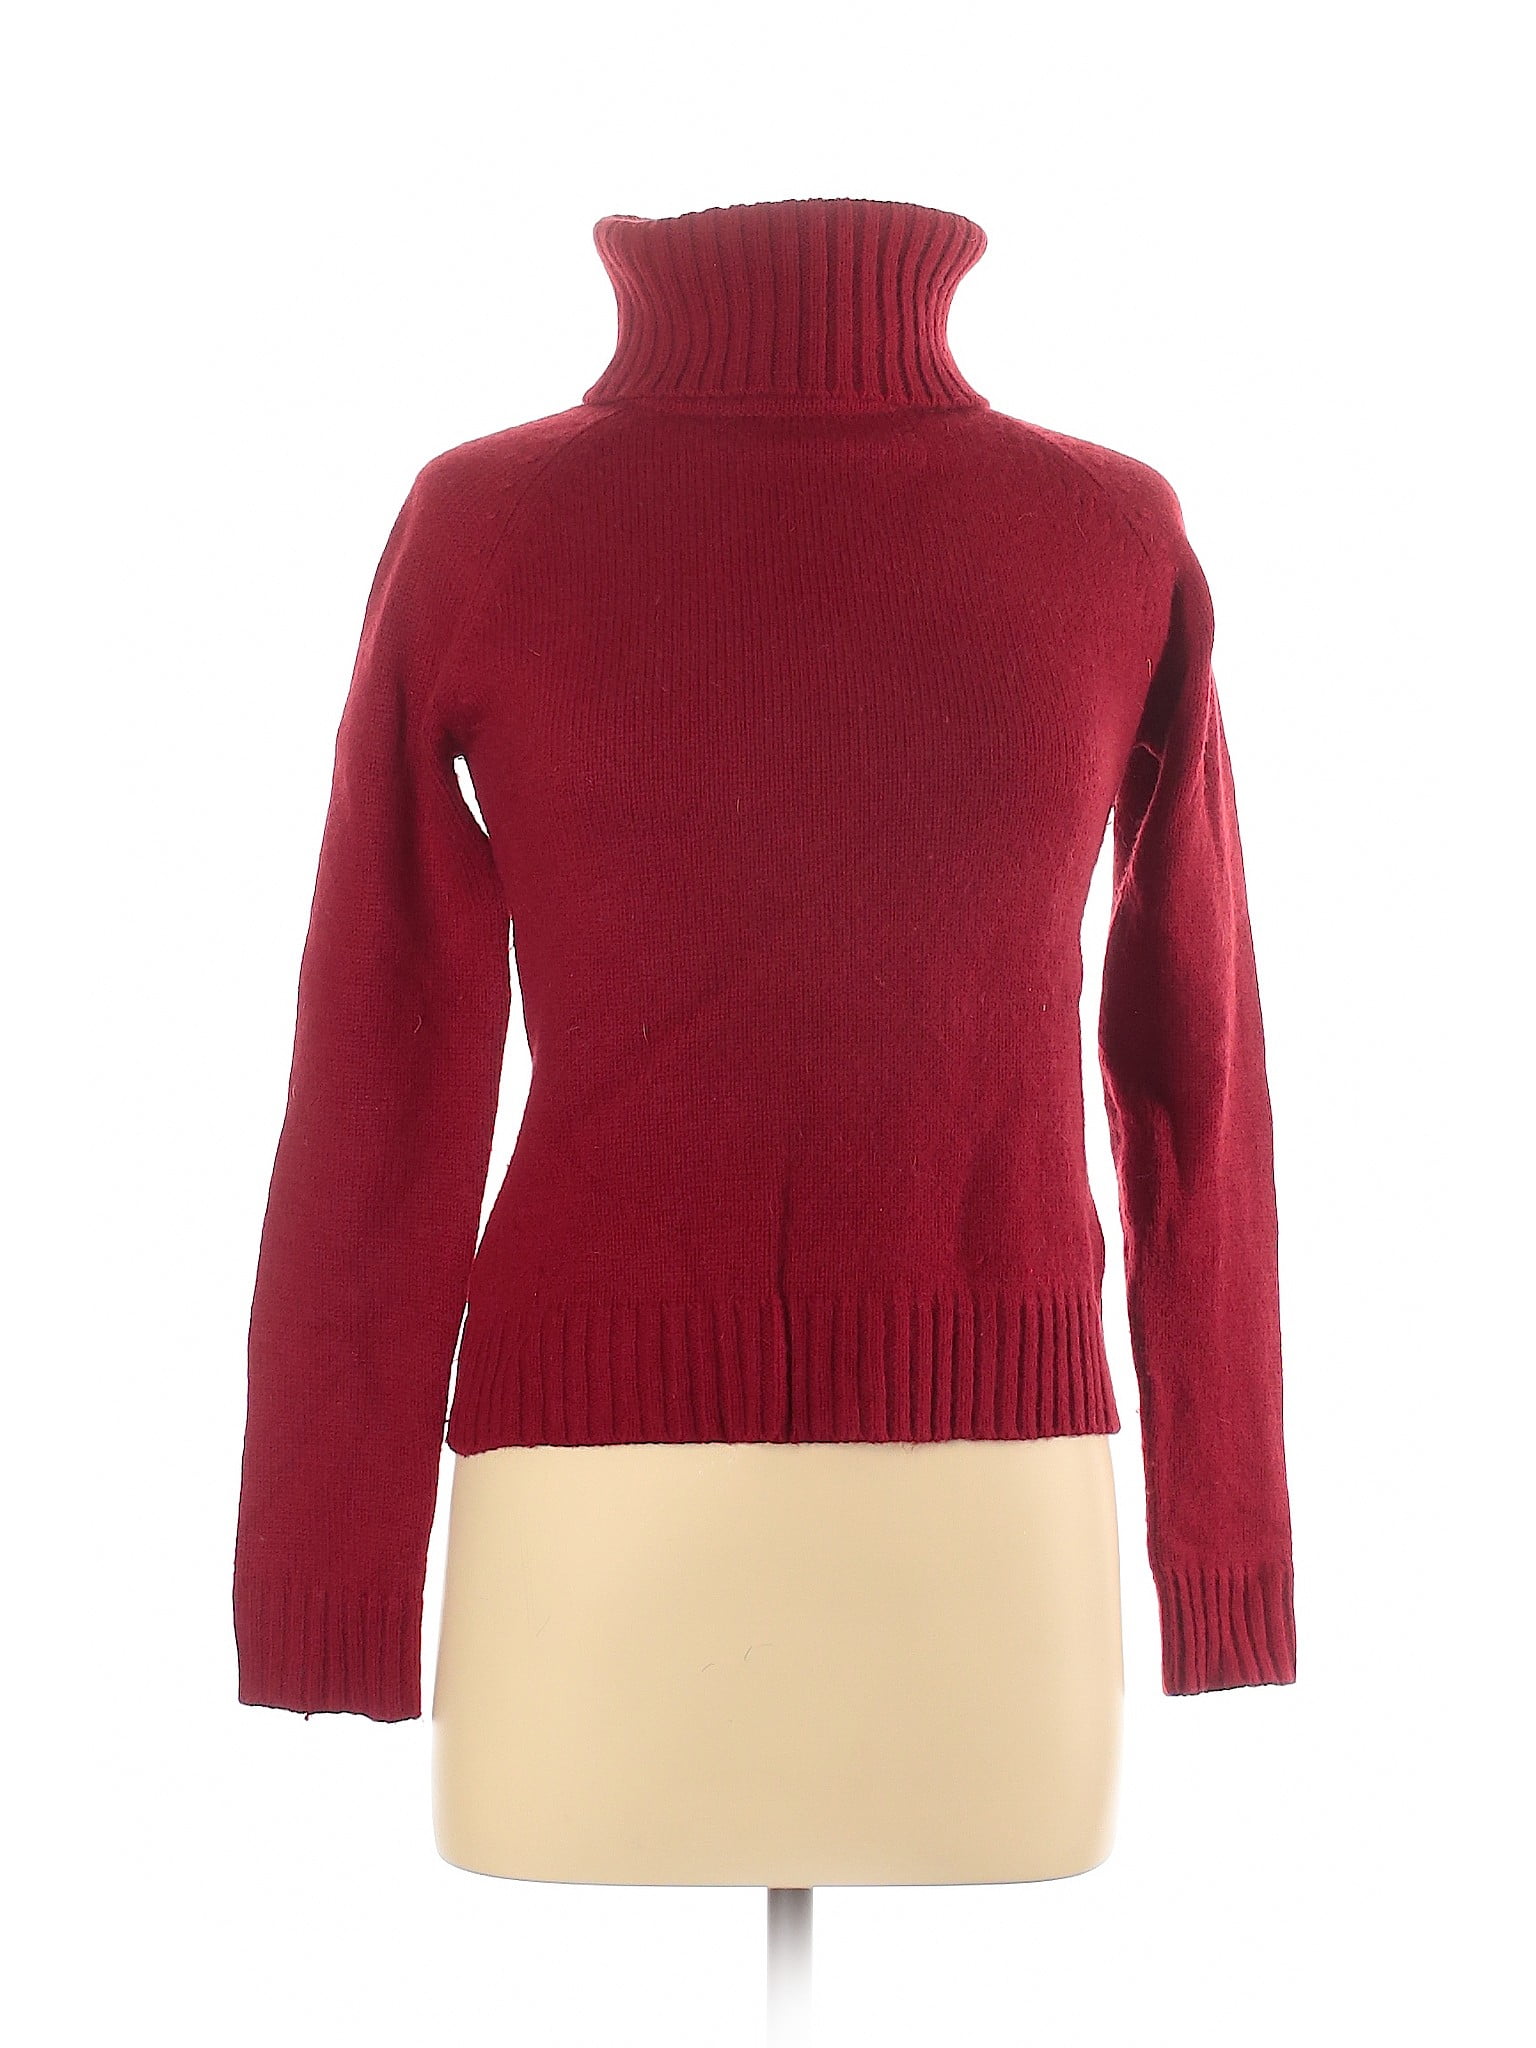 ZARA - Pre-Owned Zara Women's Size M Turtleneck Sweater - Walmart.com ...